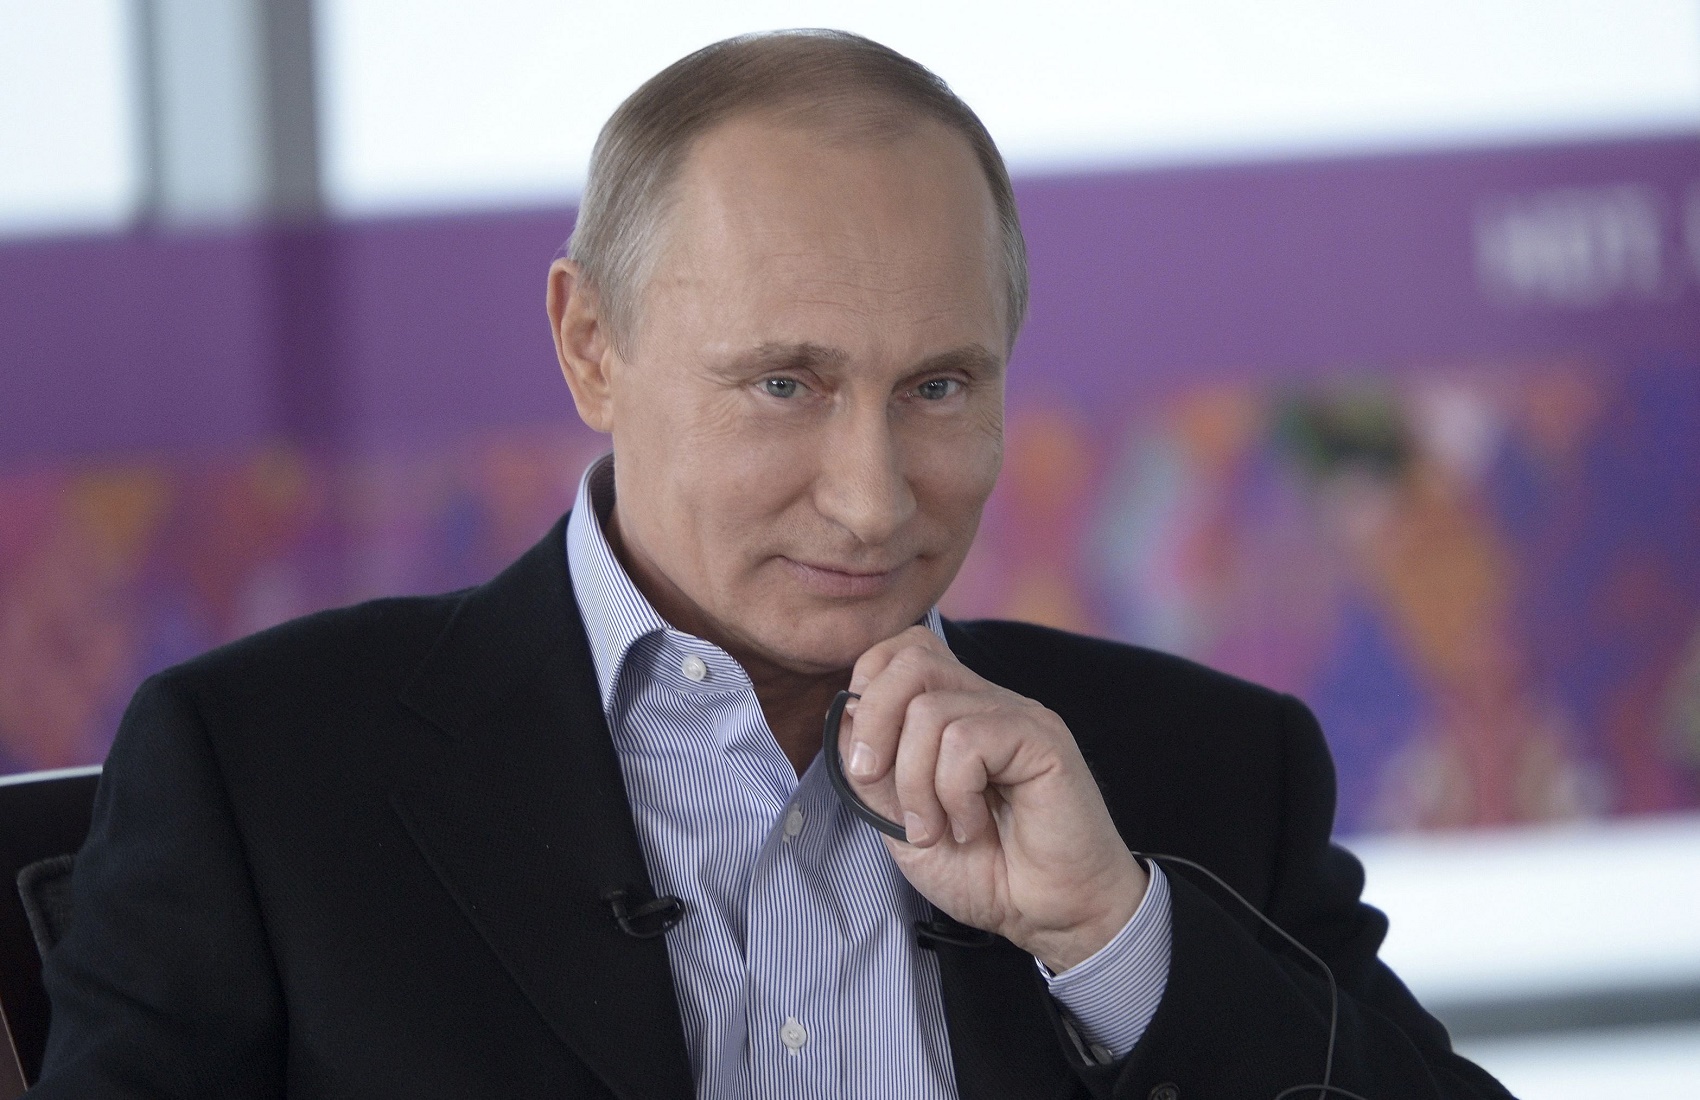 Нацрада объявила предупреждение телеканалу «НАШ» за трансляцию пресс-конференции Путина